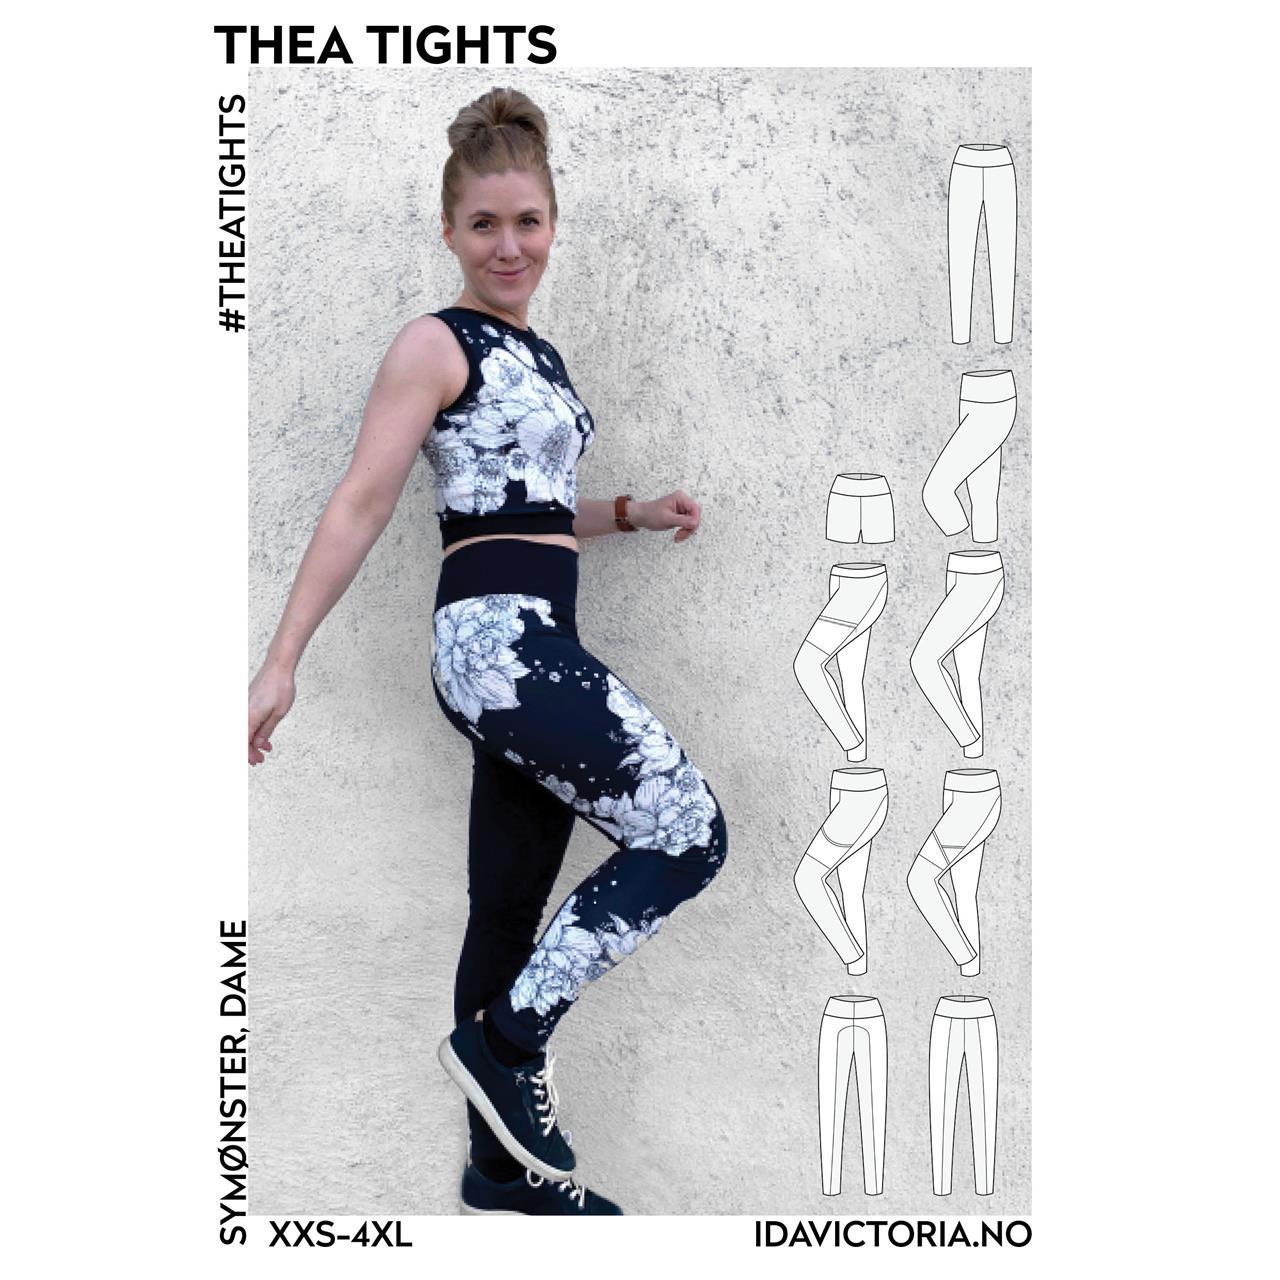 Thea thights